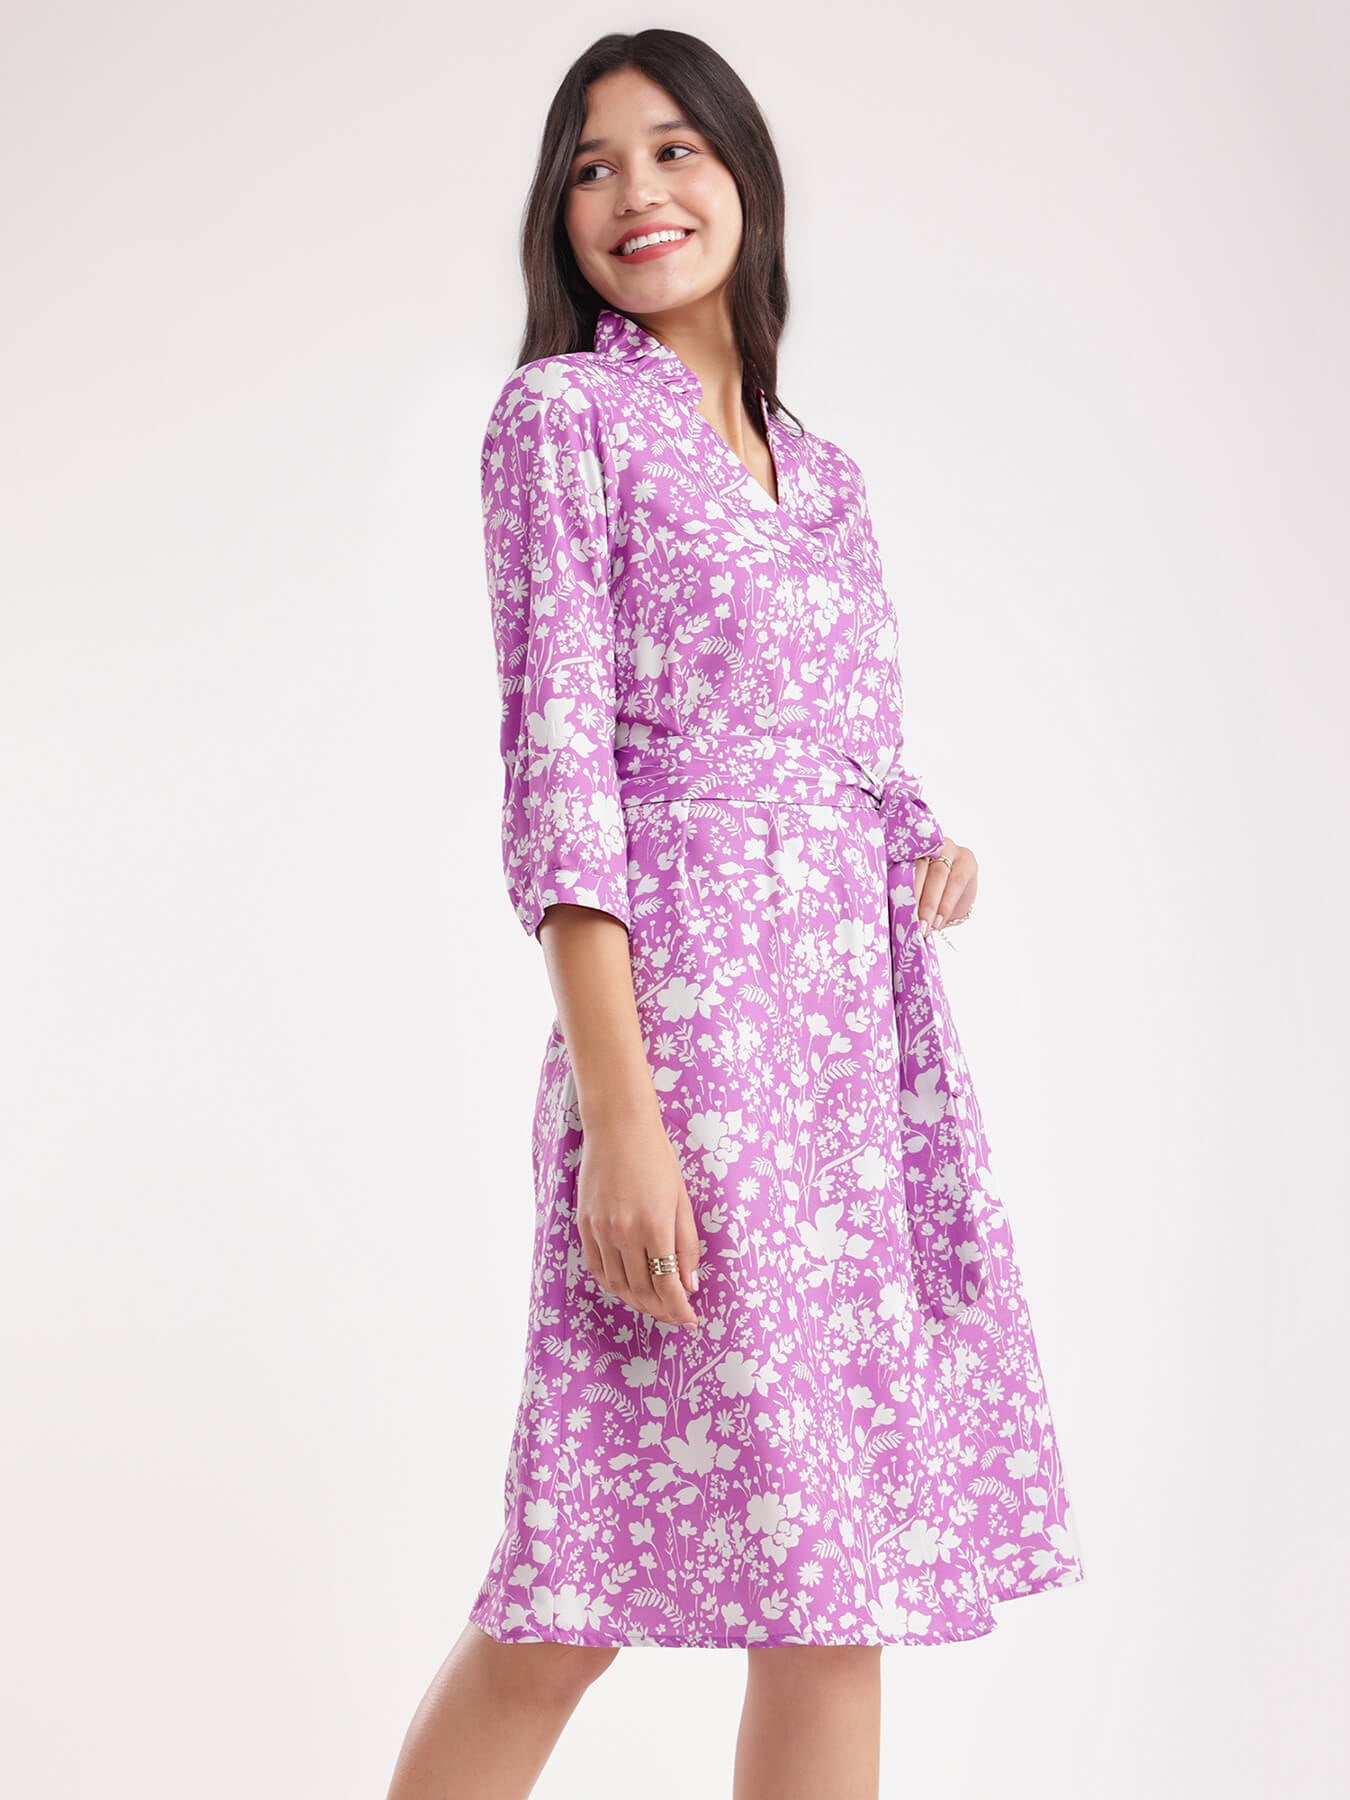 Floral Print Dress - Lilac